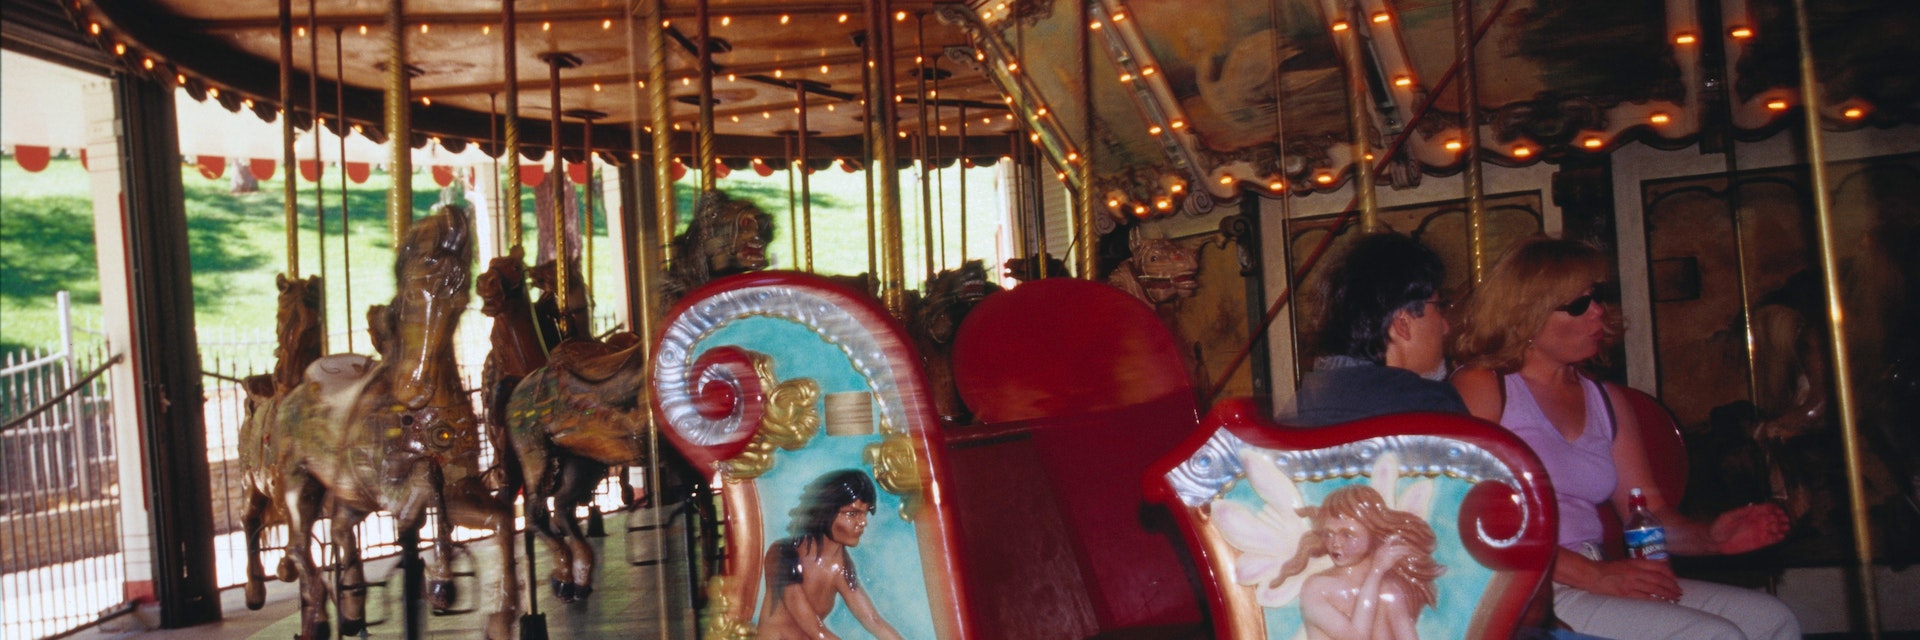 Griffith Park merry-go-round.